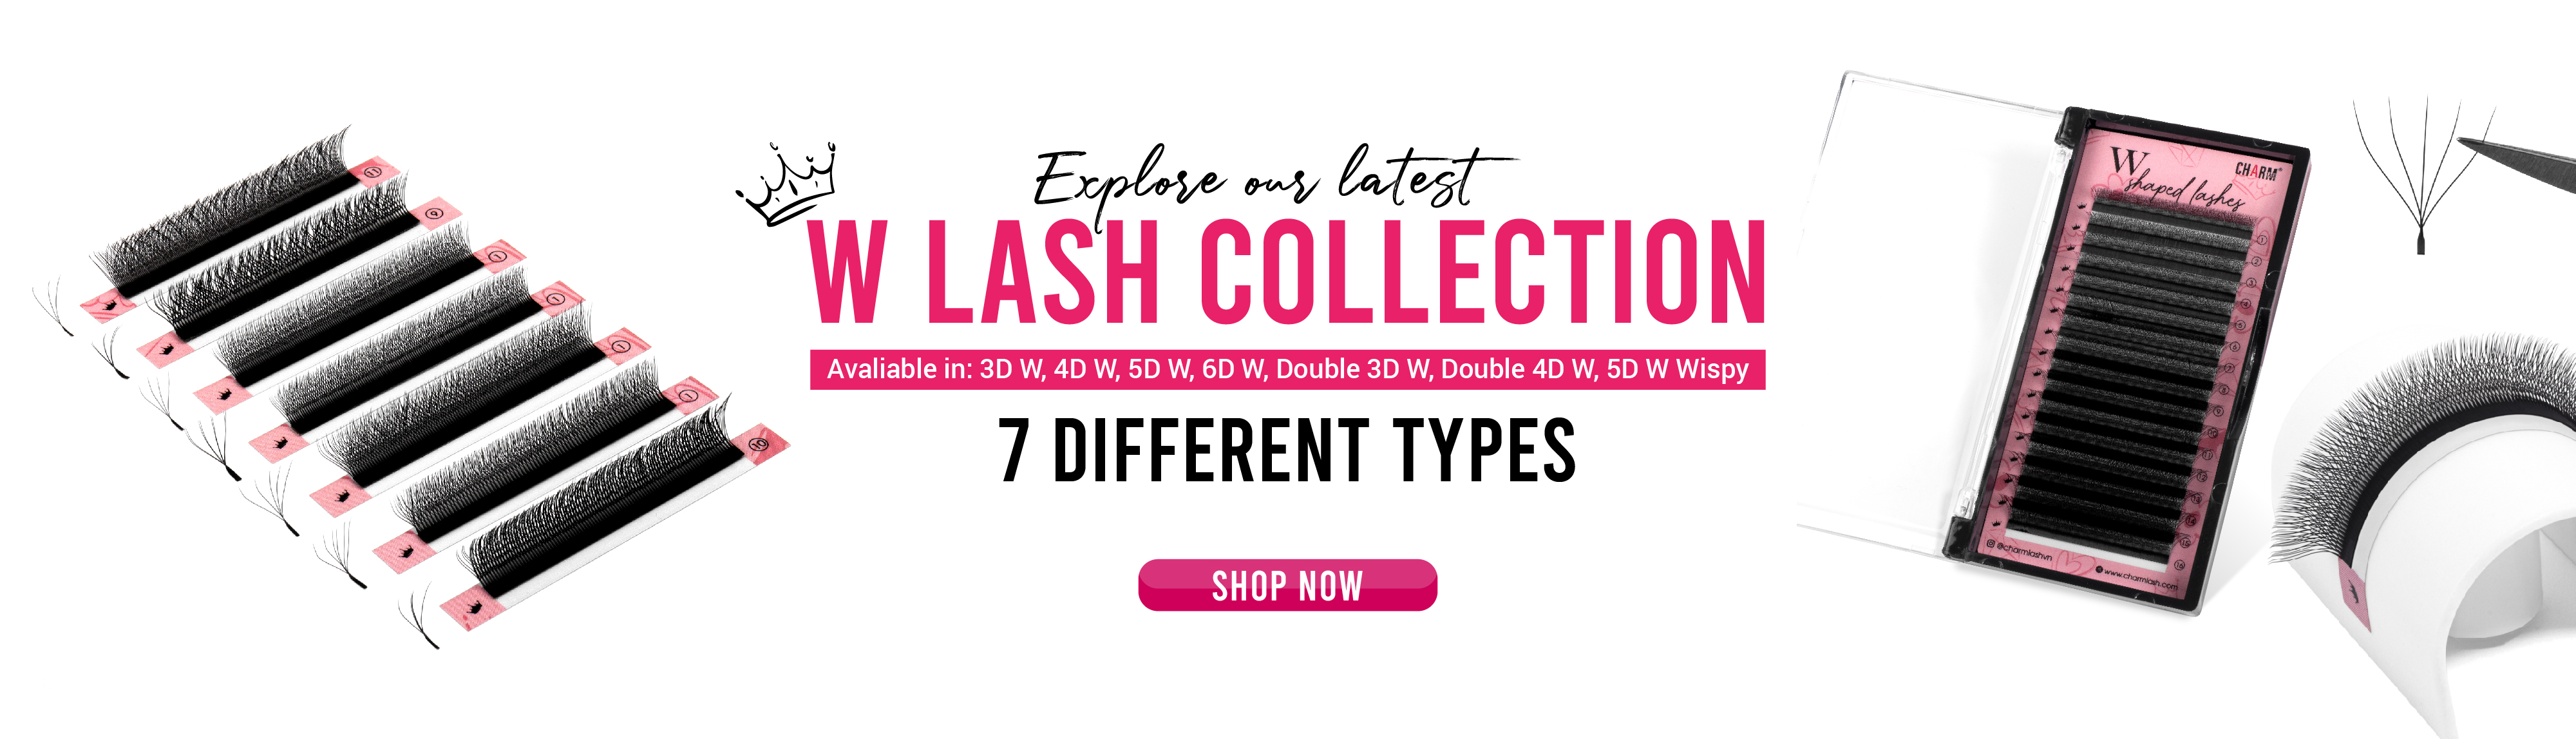 W-lash-collection